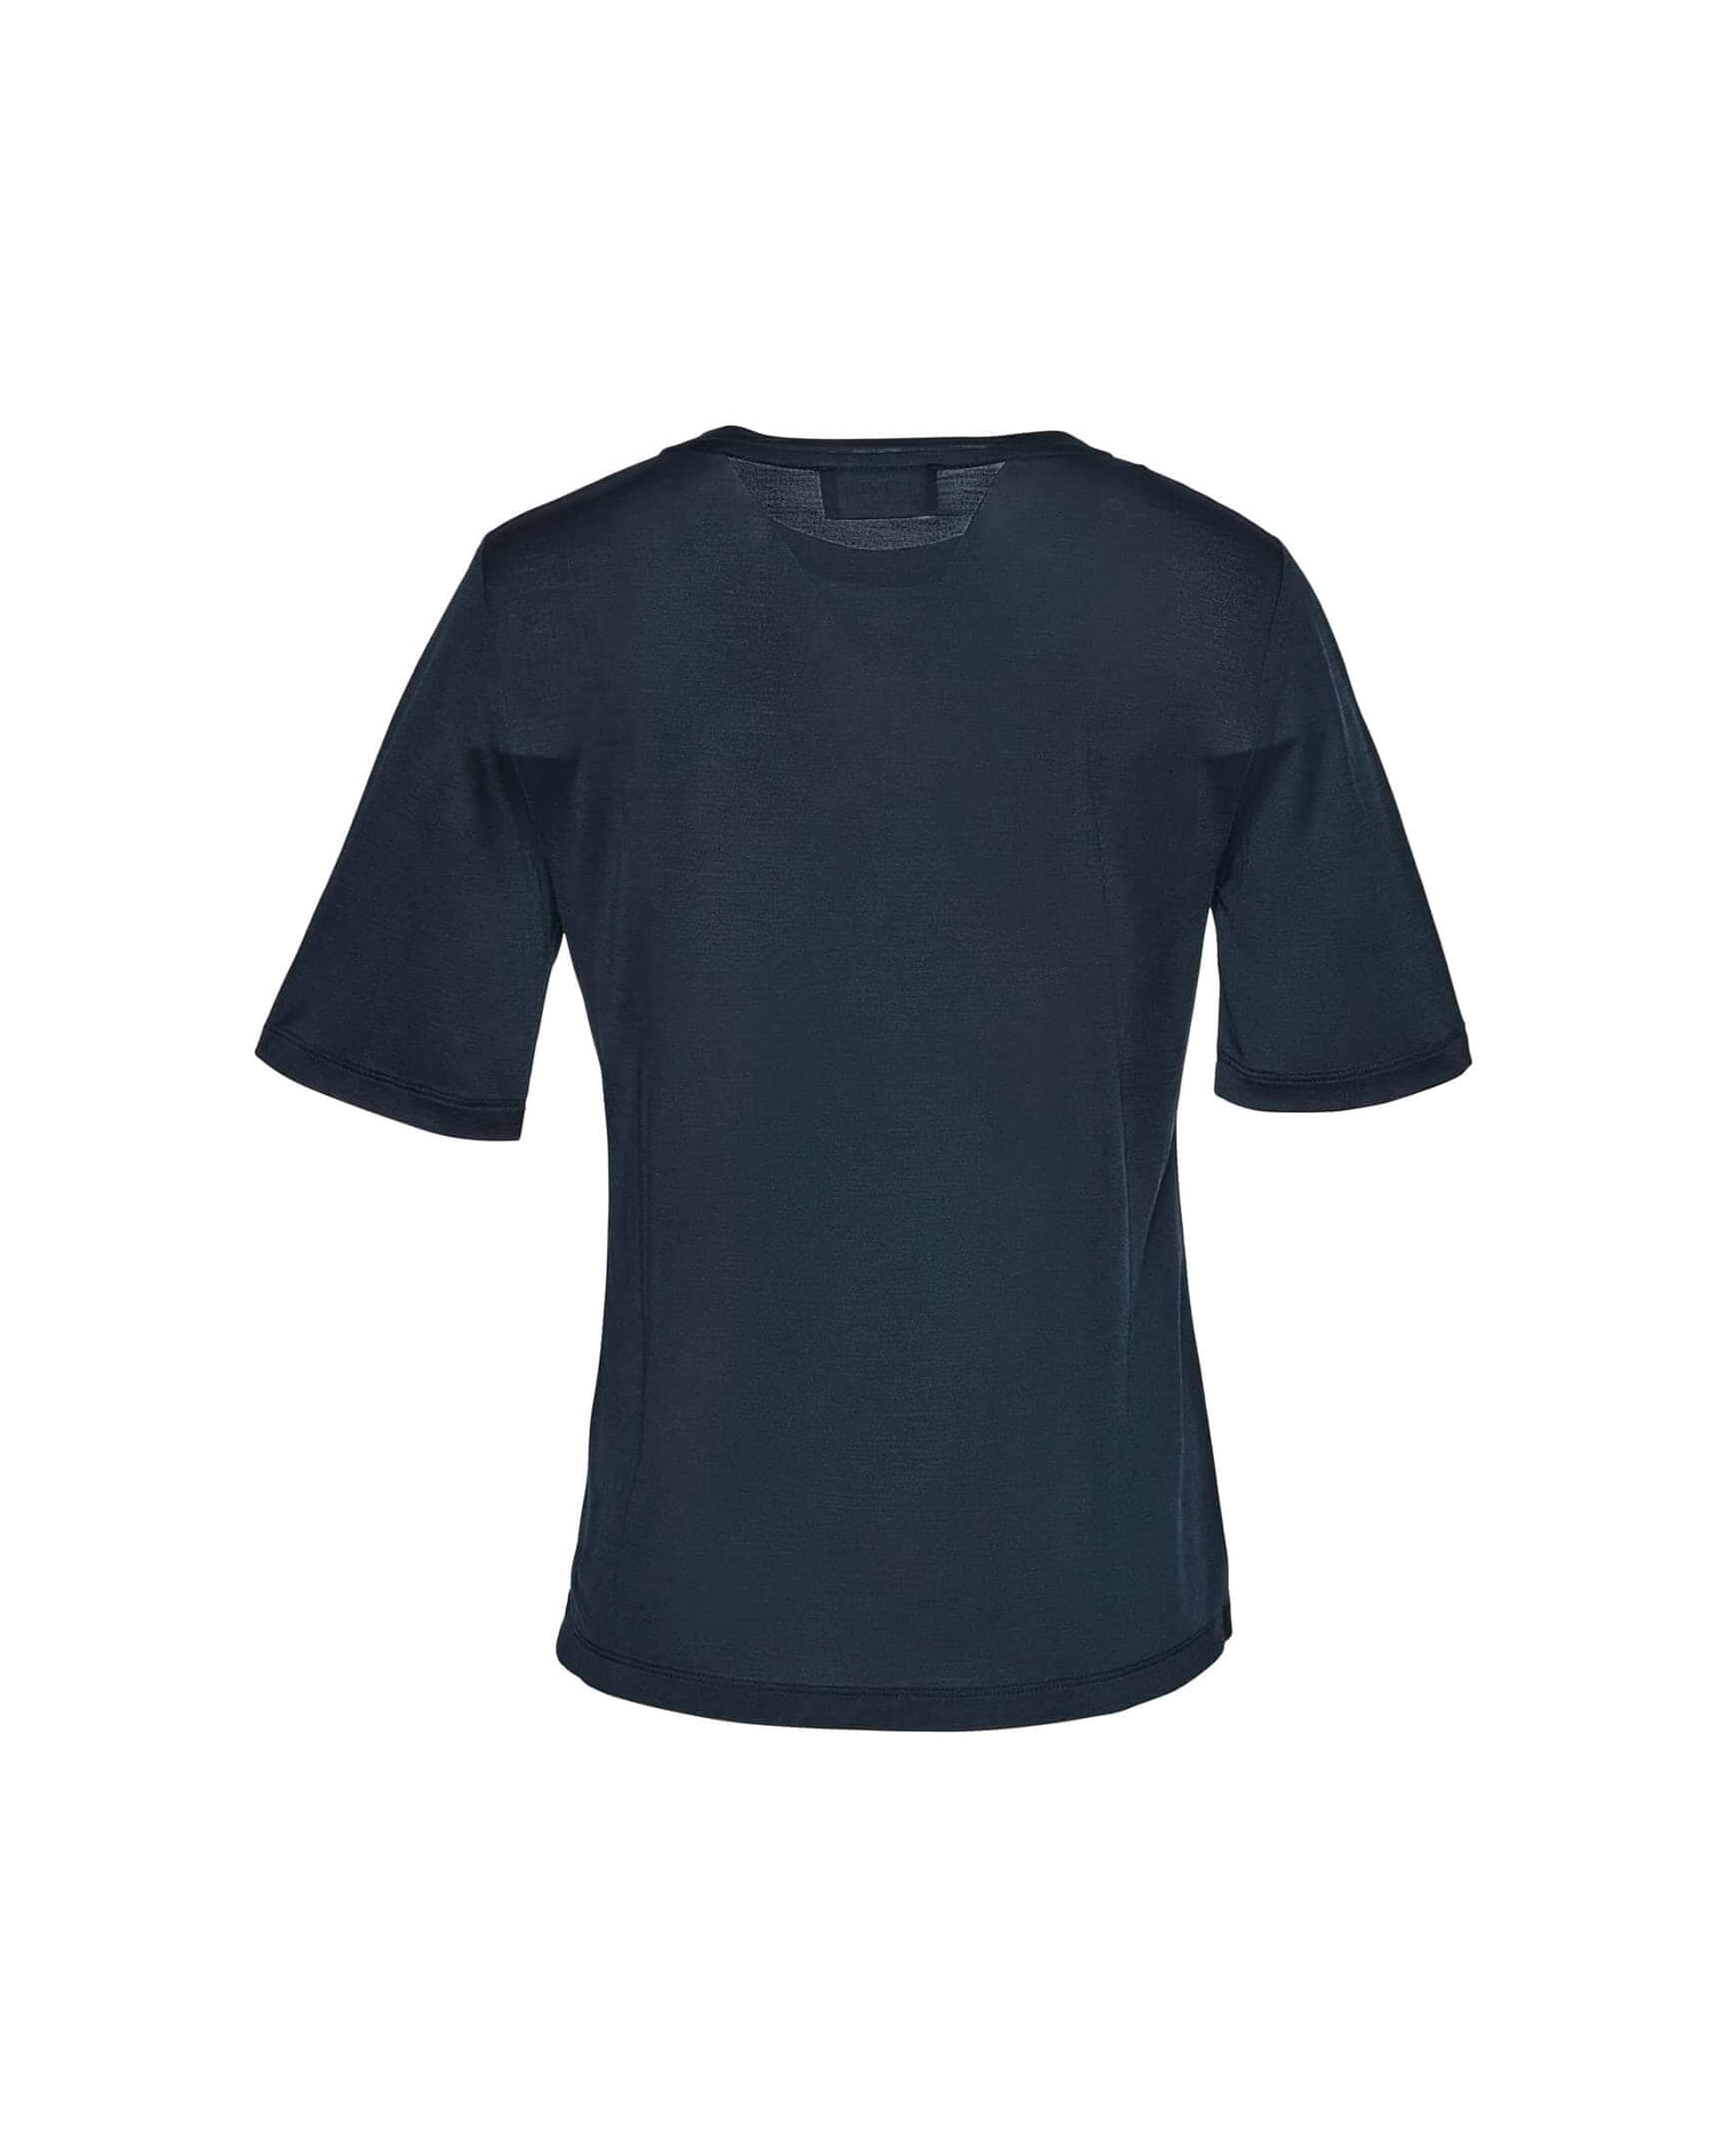 Silk V-neck T-shirt in navy blue